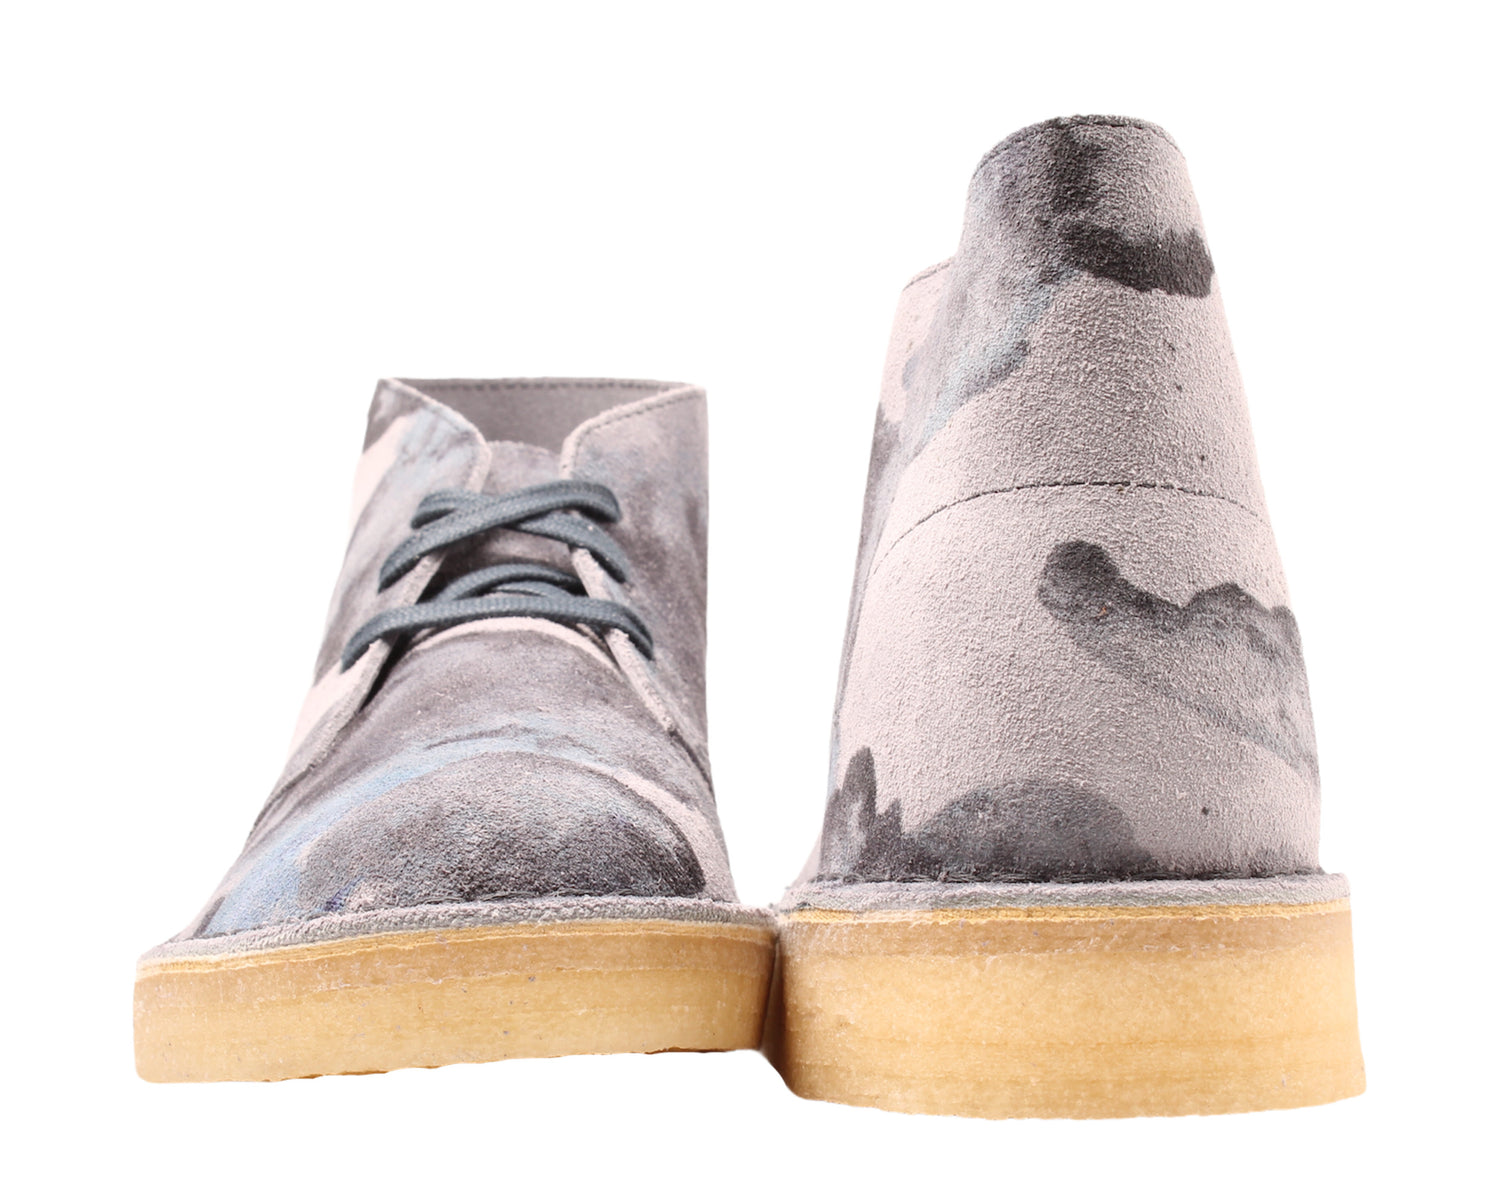 Clarks Originals Desert Coal Men's Casual Chukka Boots